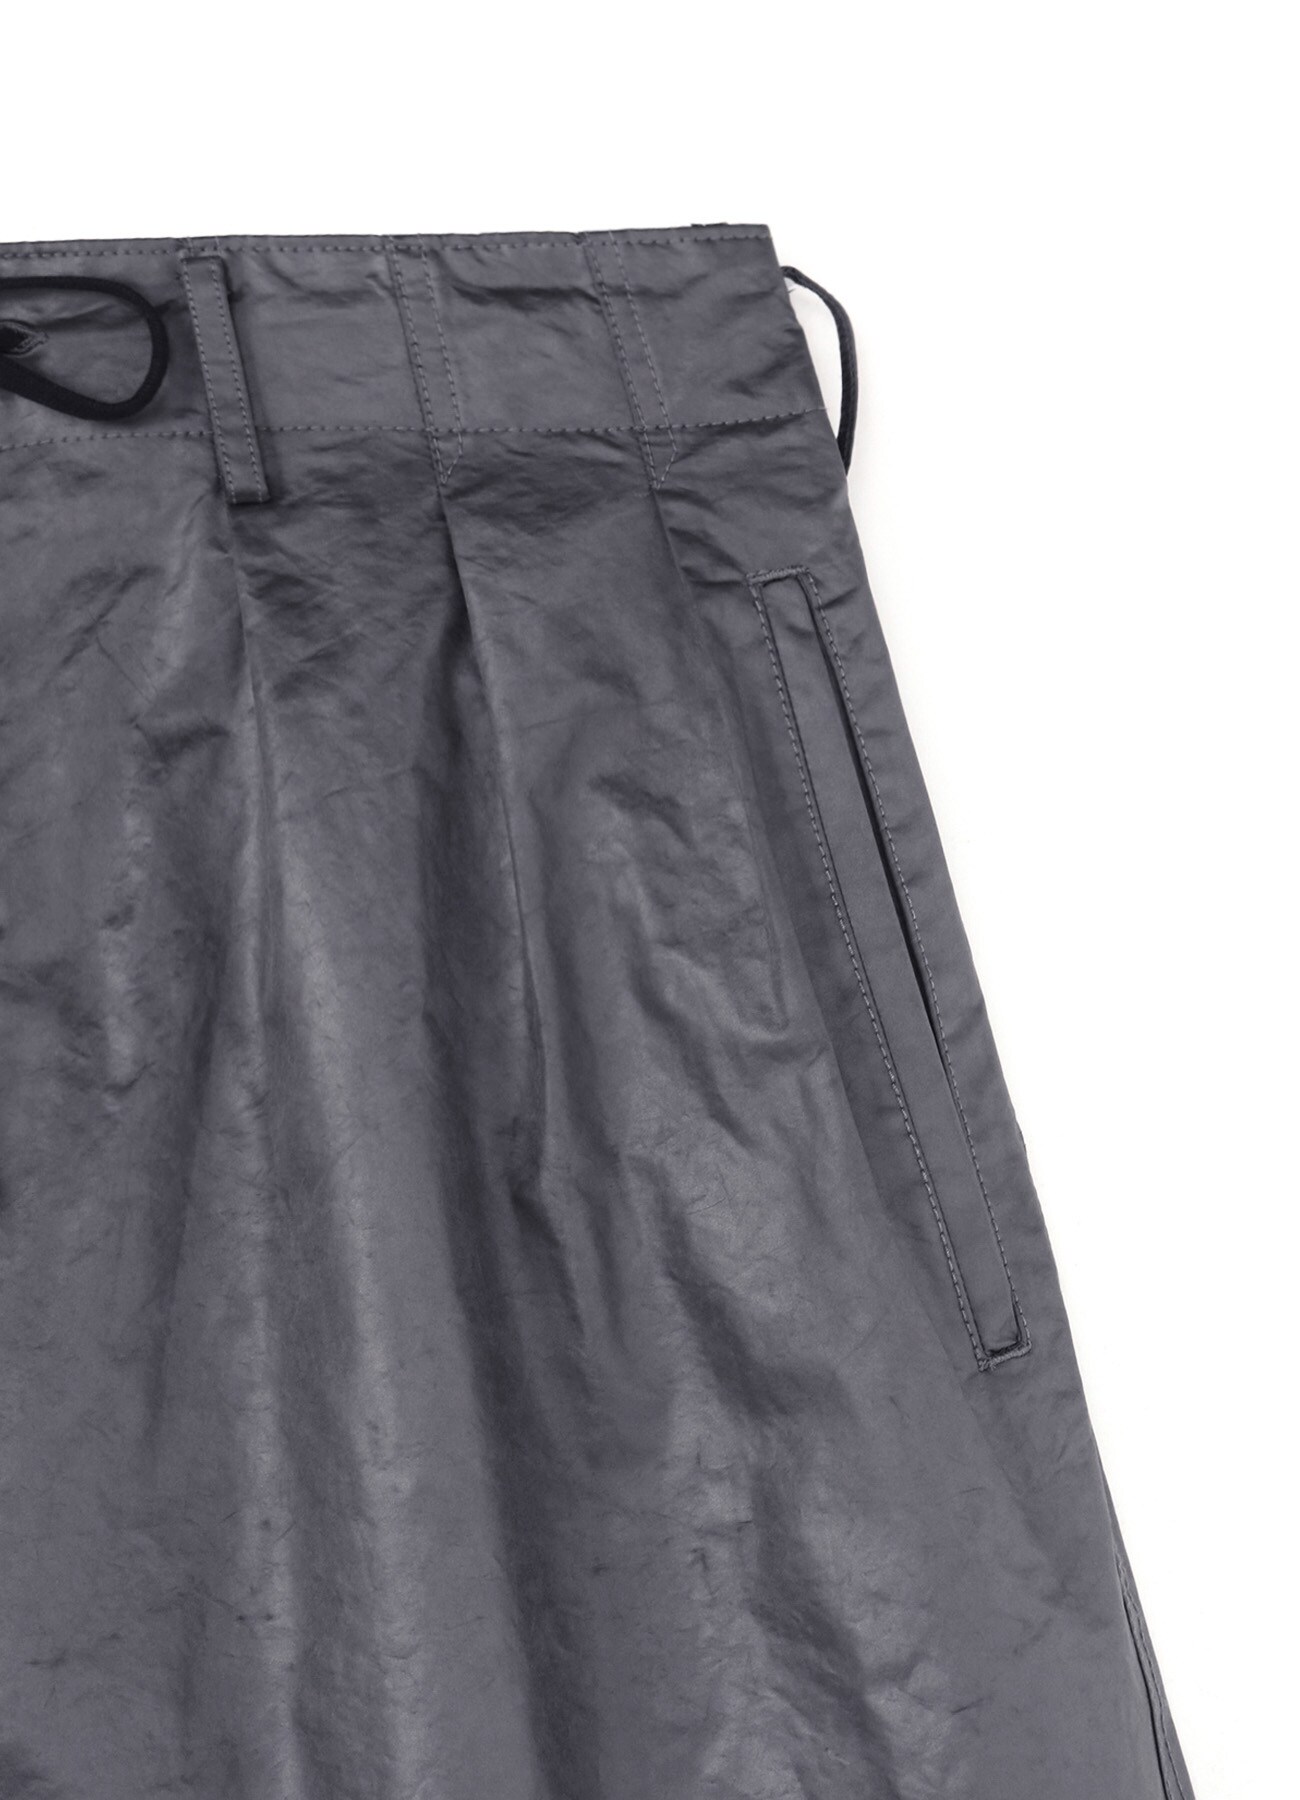 Pe/Ny Water Repellent Taffeta Buggy Shorts